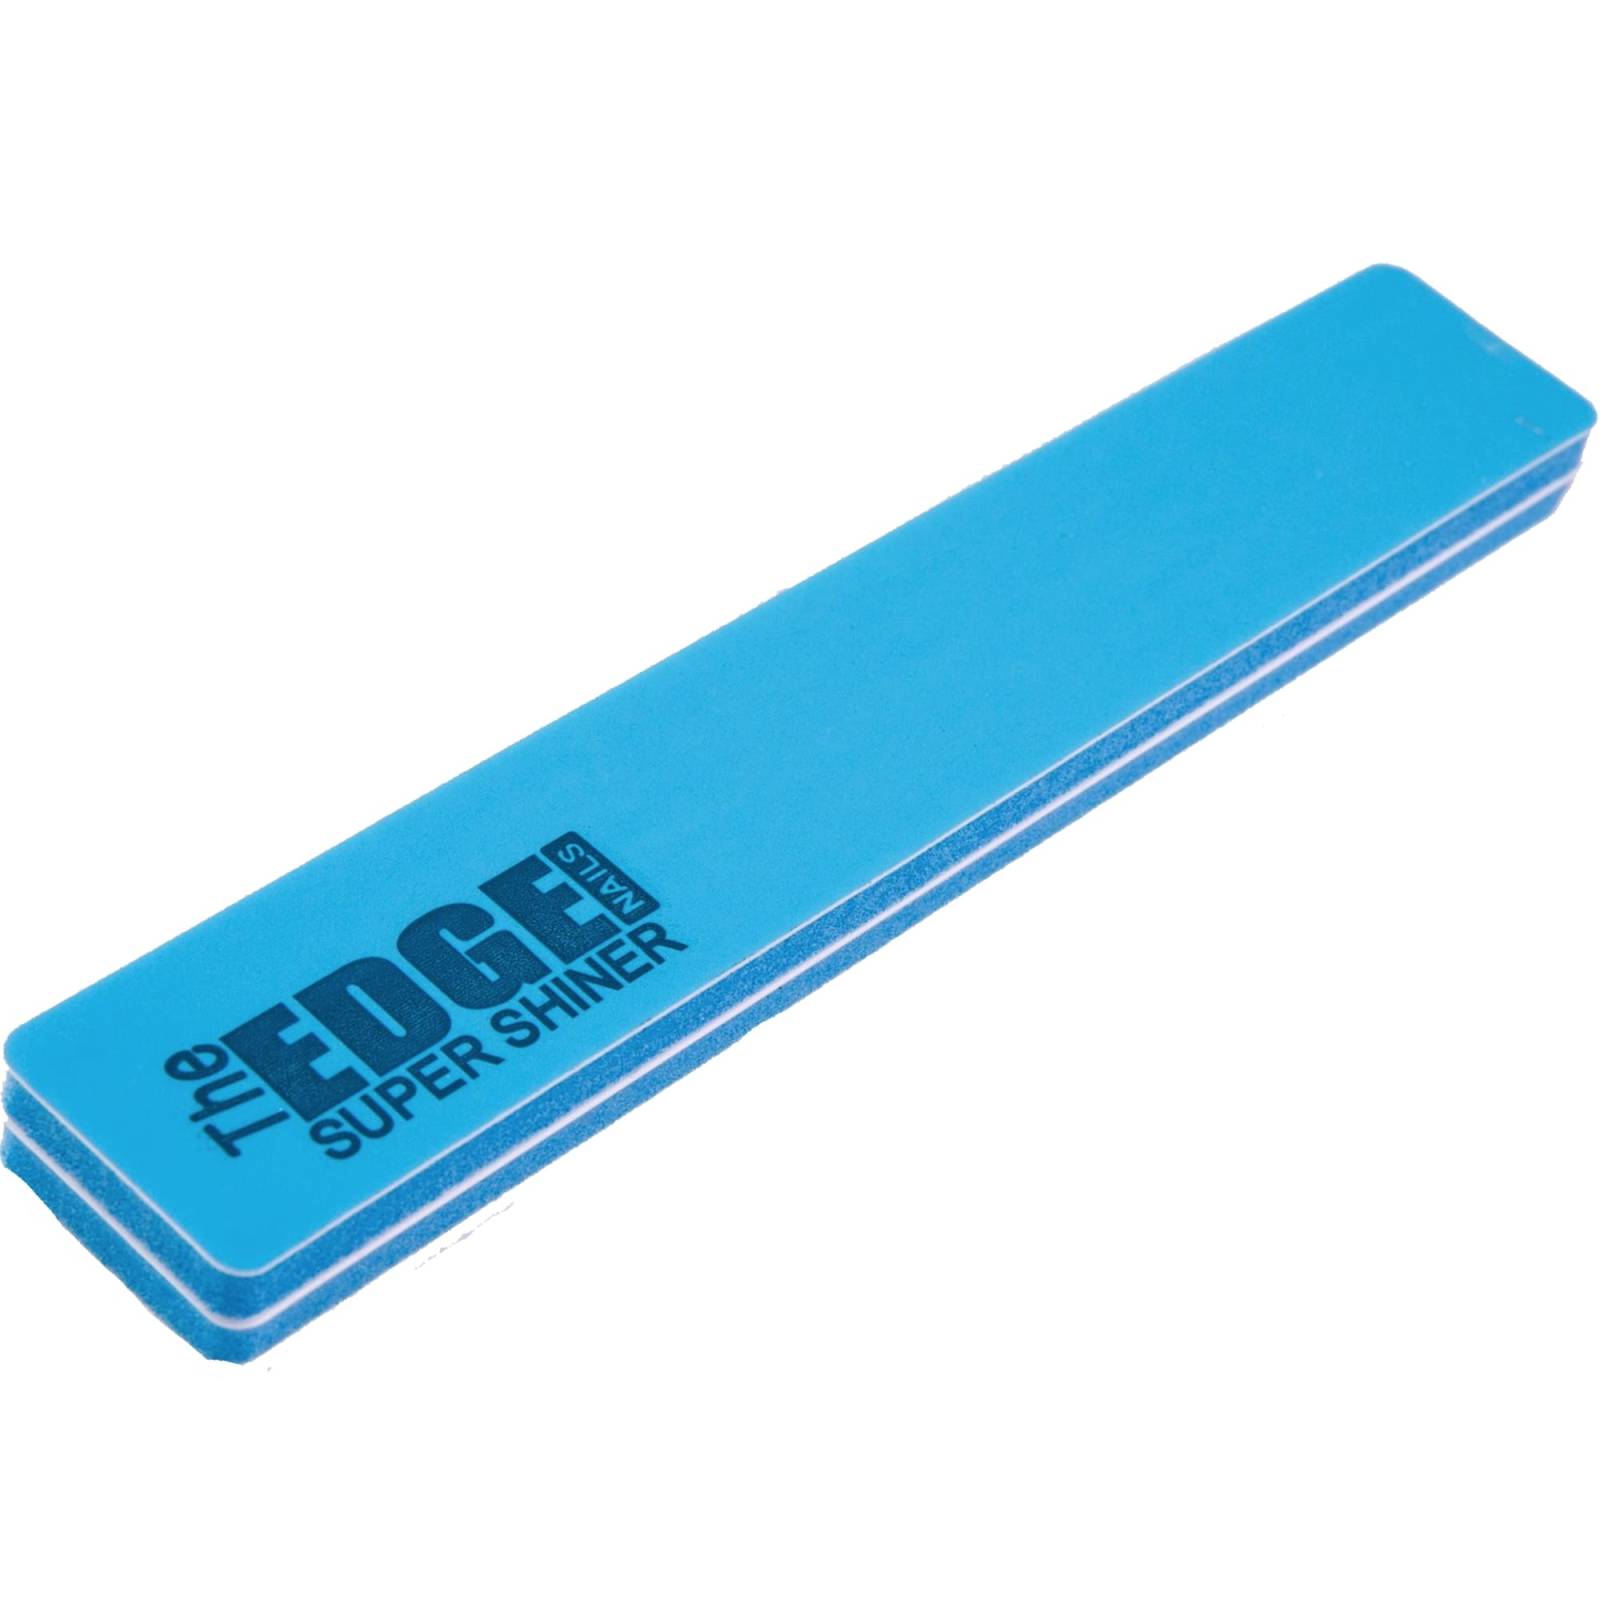 The Edge Nails Pro Nail Files & Buffers - Super Shiner - (BLUE) (2006802)